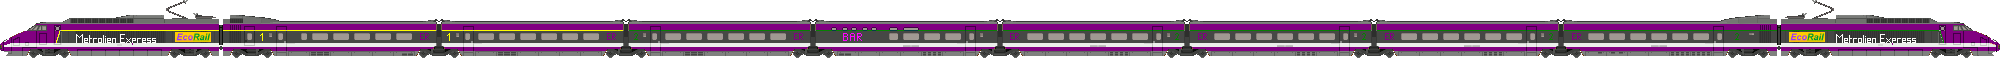 TGV PSE